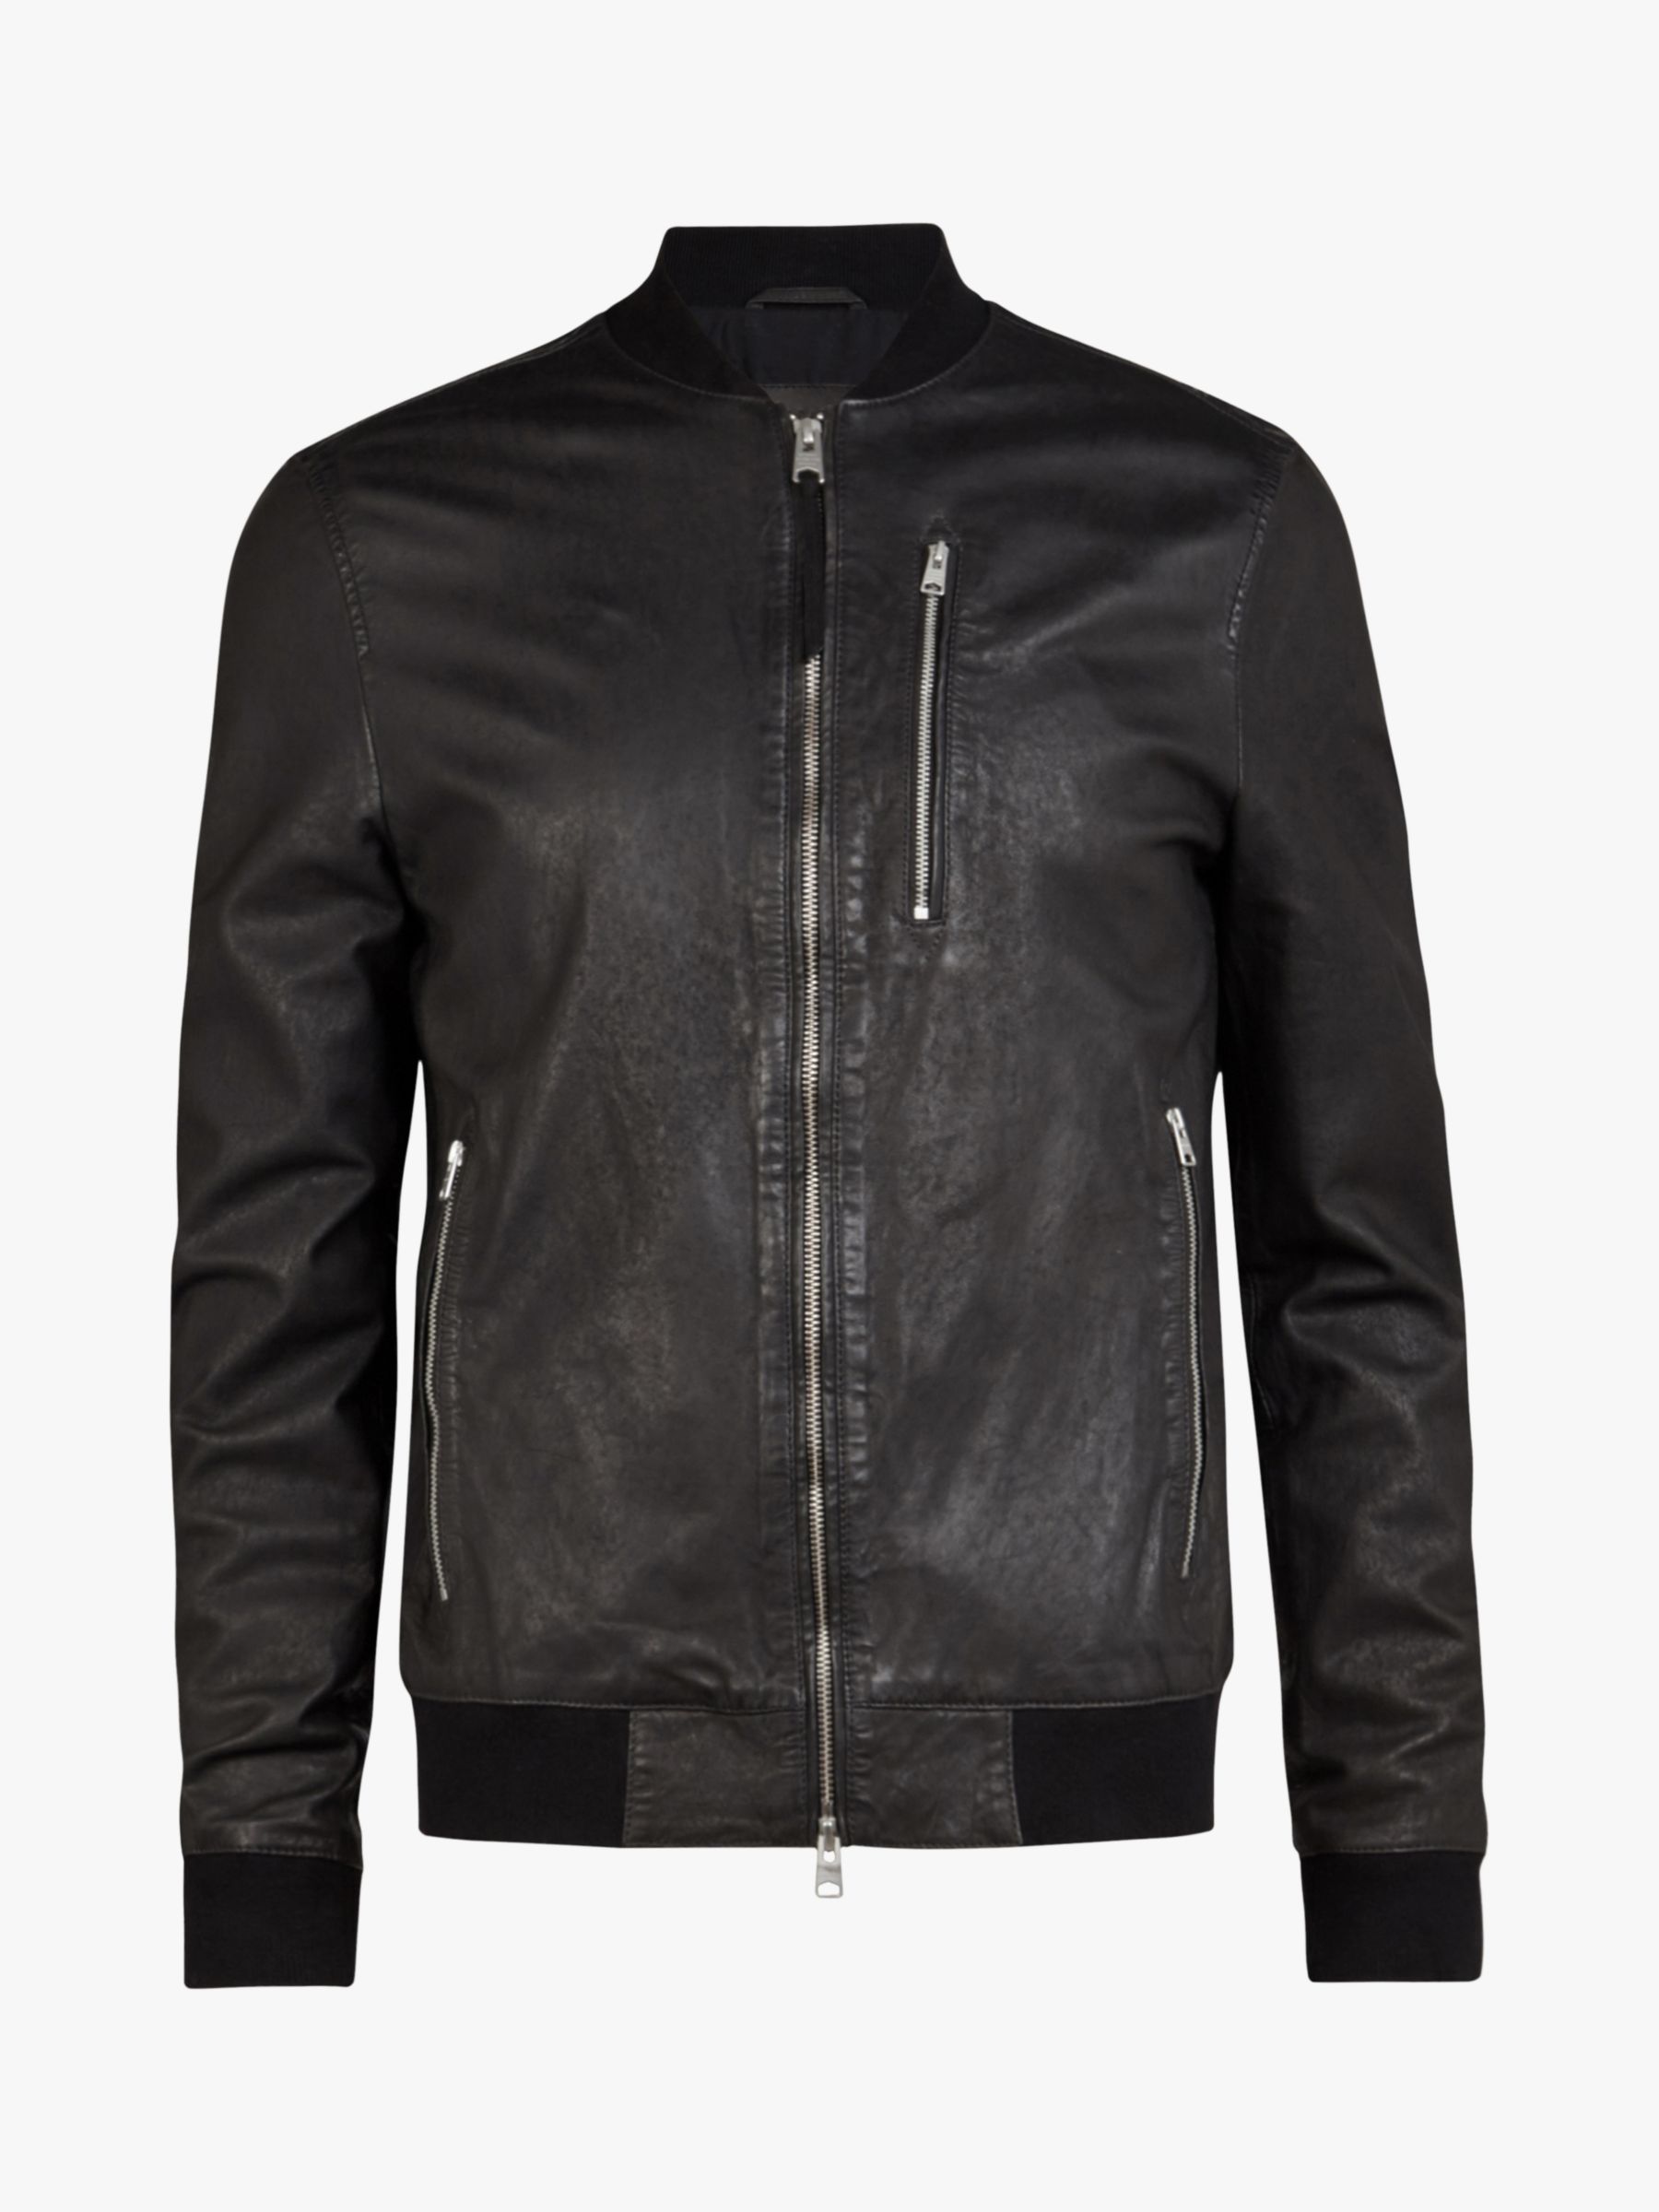 AllSaints Kino Leather Bomber Jacket, Black, XXS